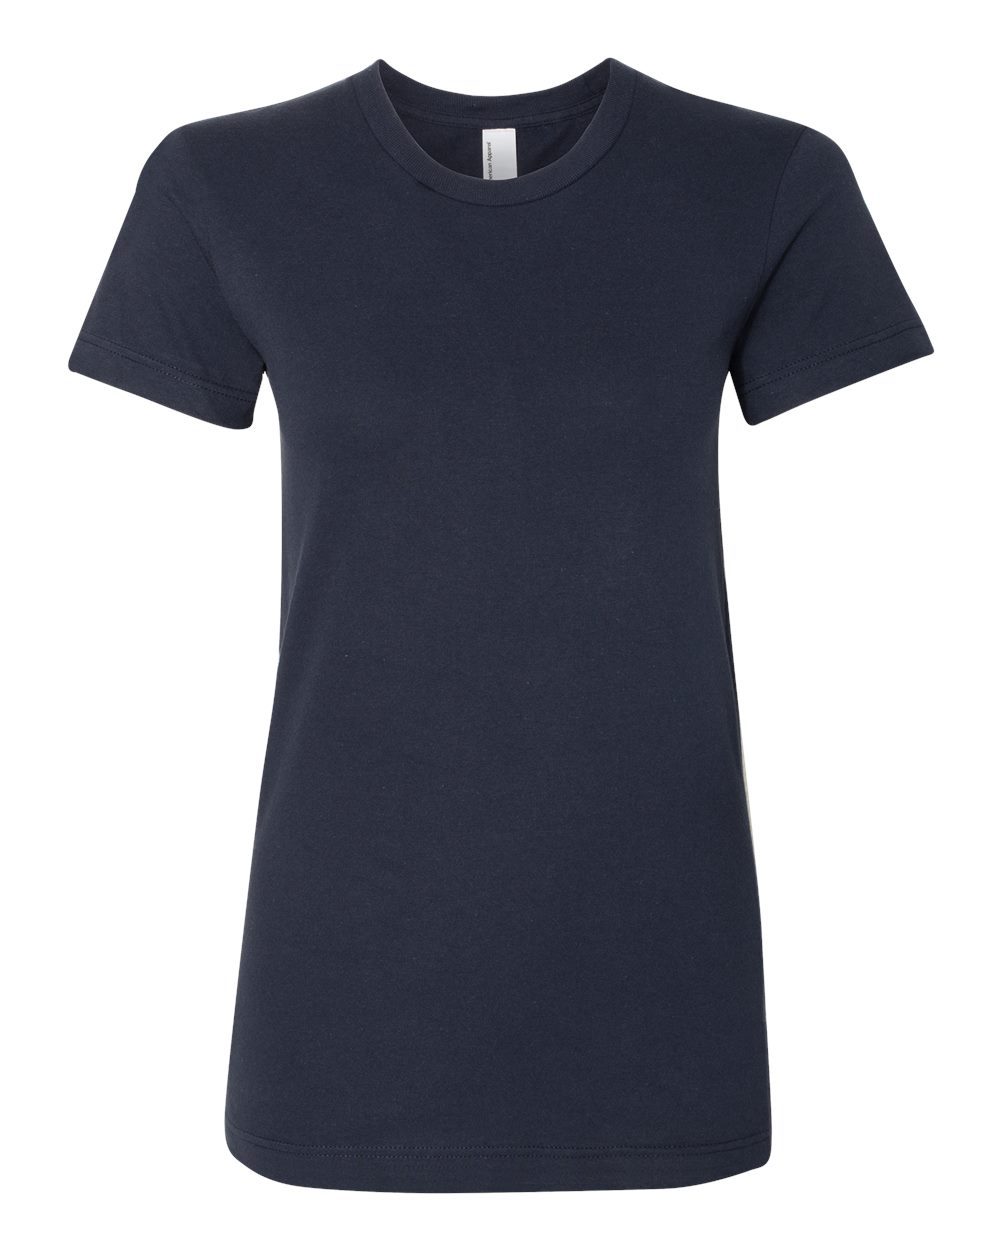 American Apparel 2102W - Women’s Fine Jersey Short Sleeve T-Shirt